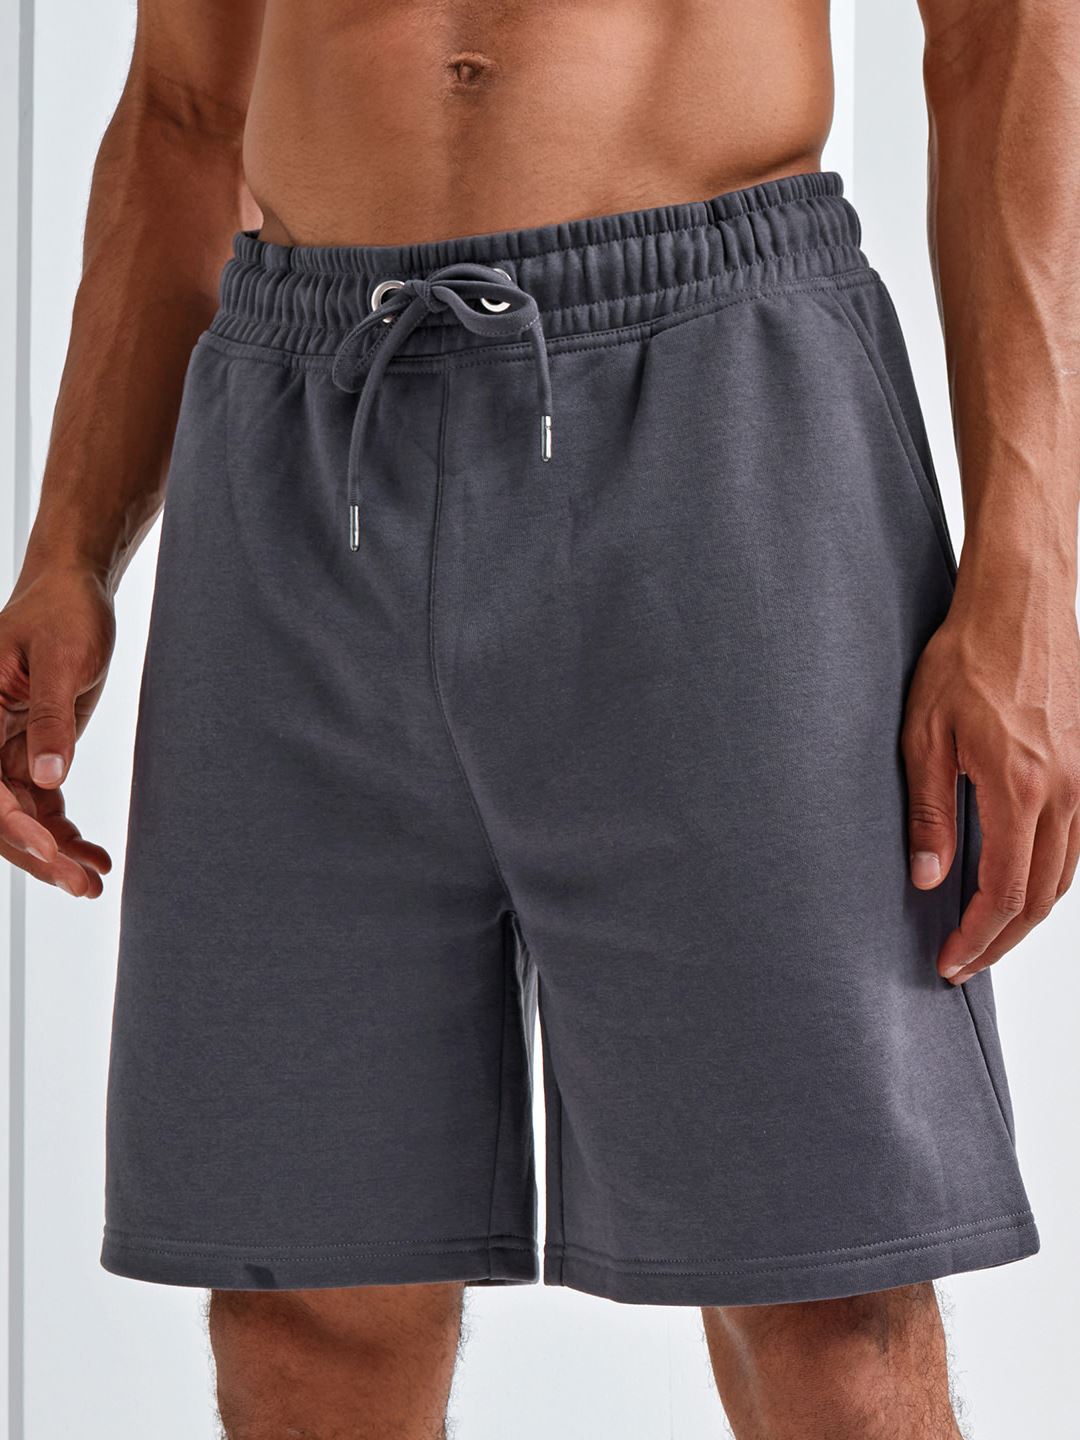 TR058 Men's Tridri® Jogger Shorts Image 1